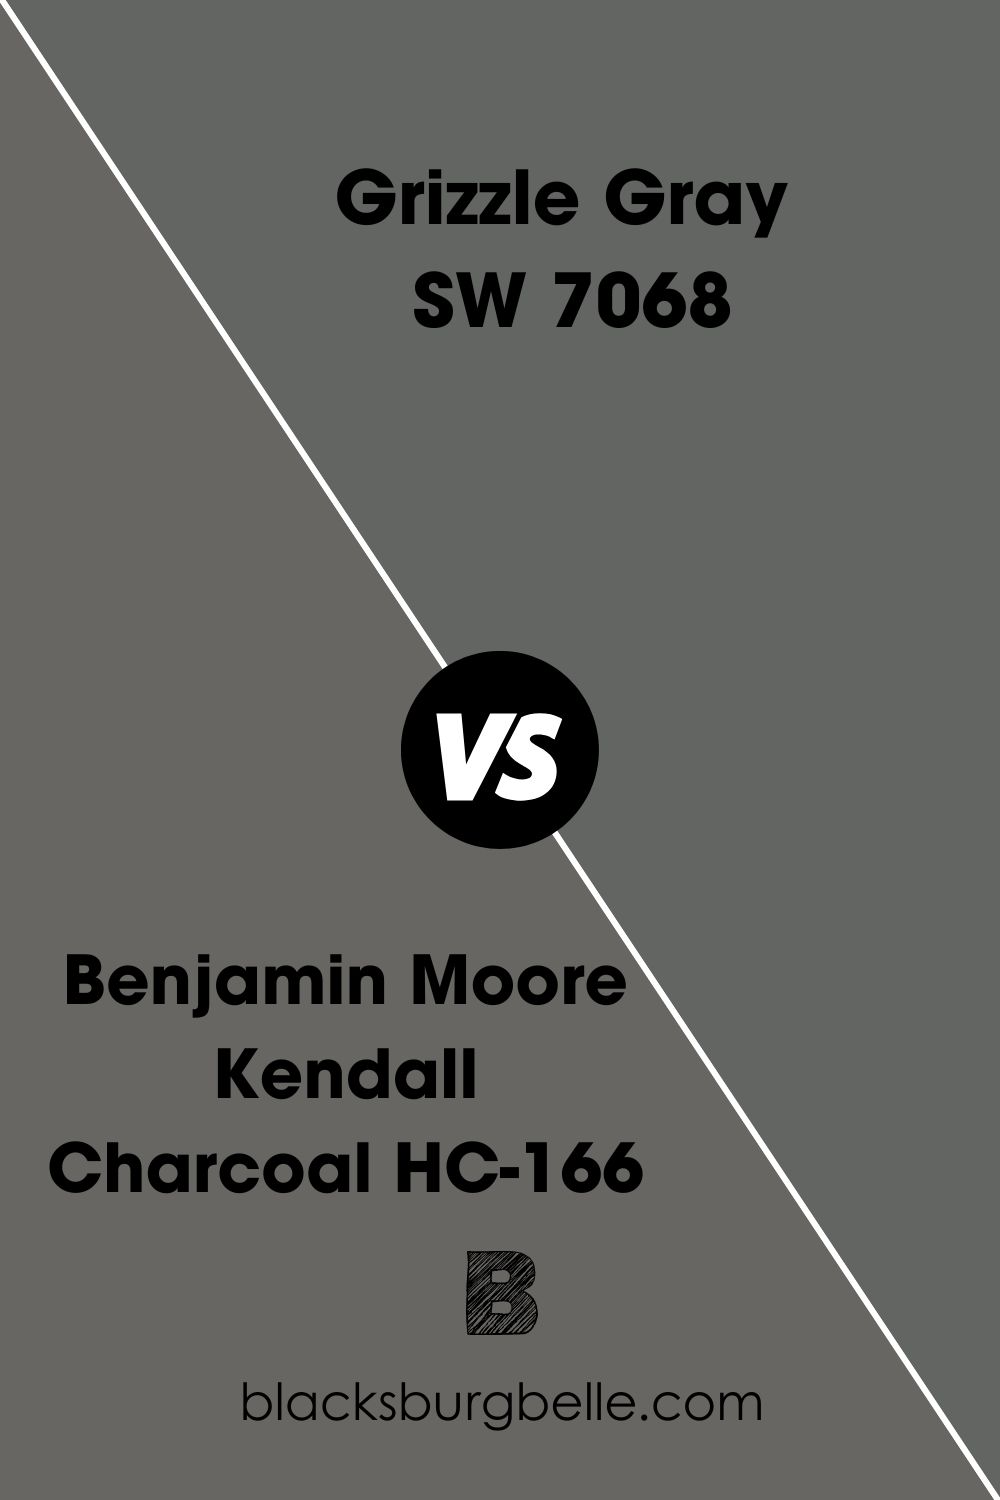 Benjamin Moore Kendall Charcoal HC-166